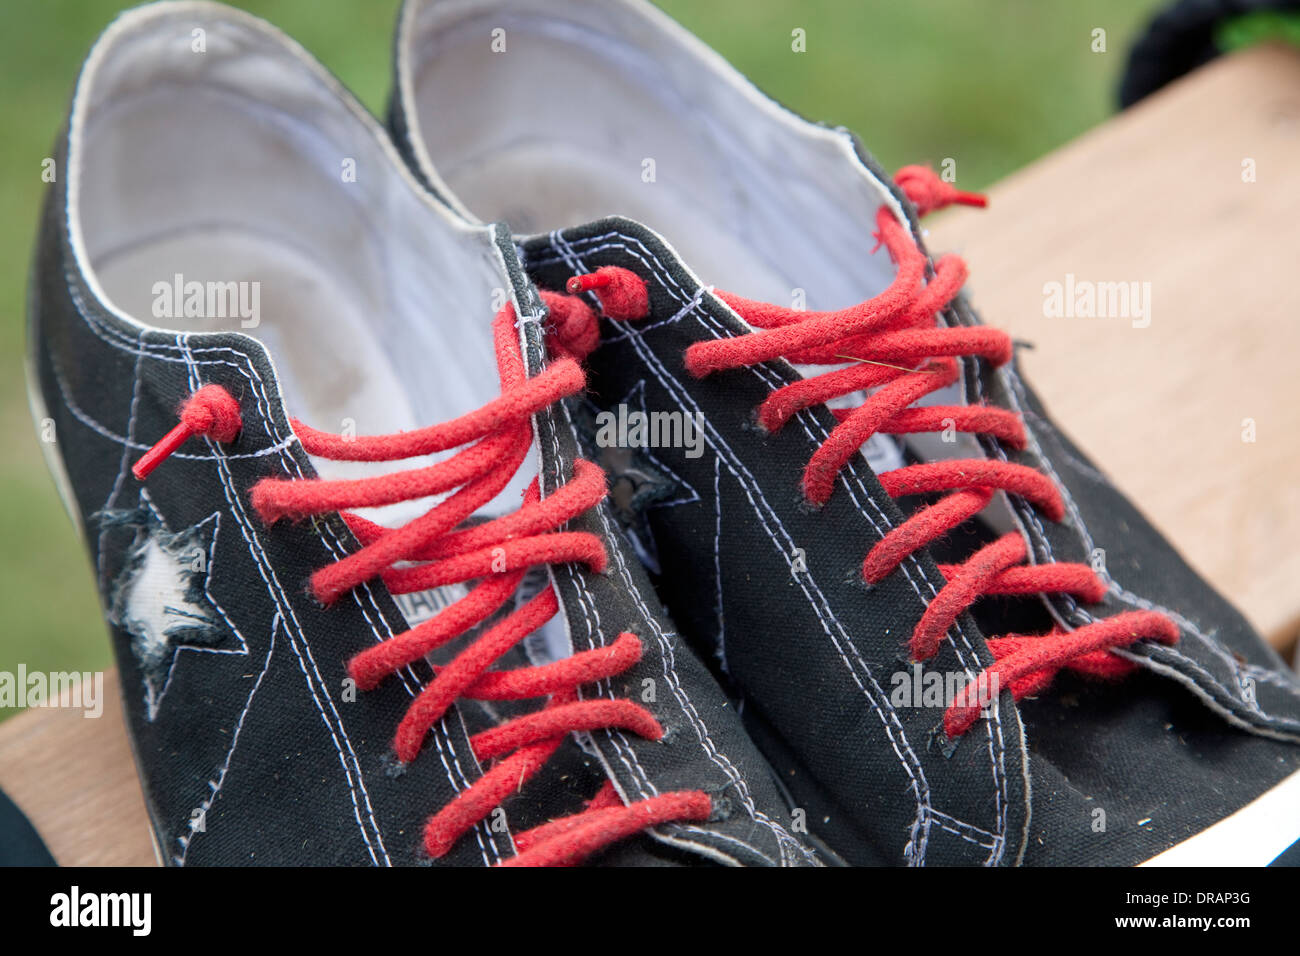 Zapatillas e imágenes de alta resolución - Alamy